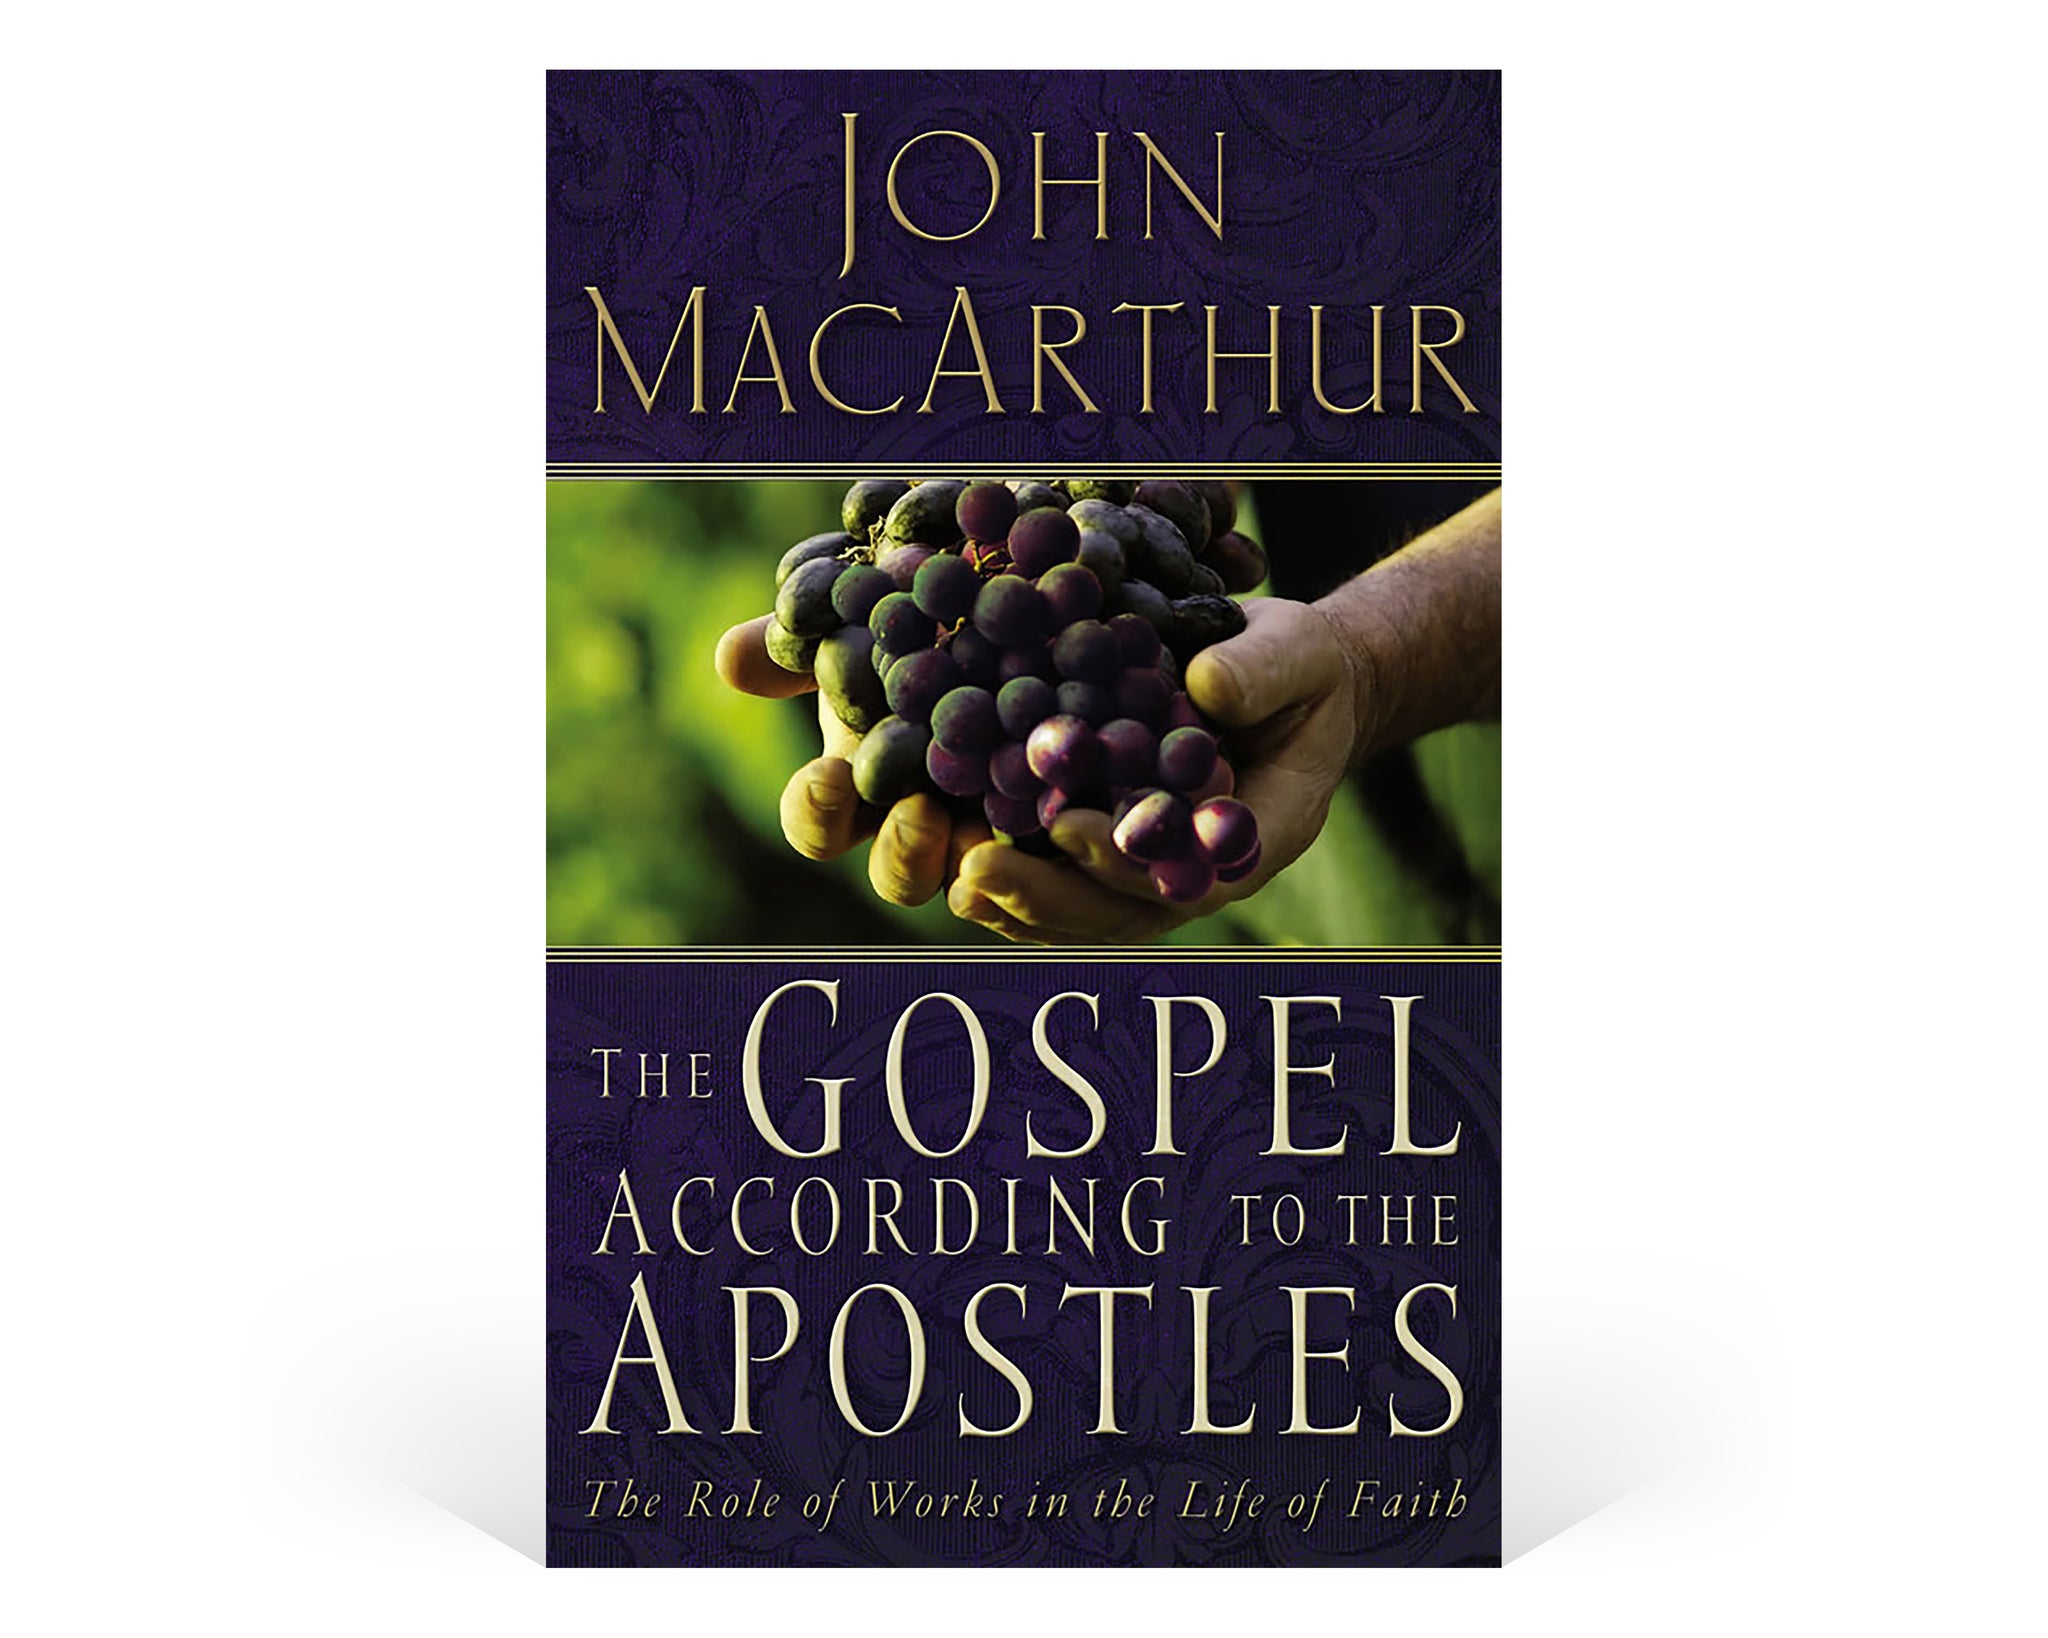 The Gospel According to the Apostles